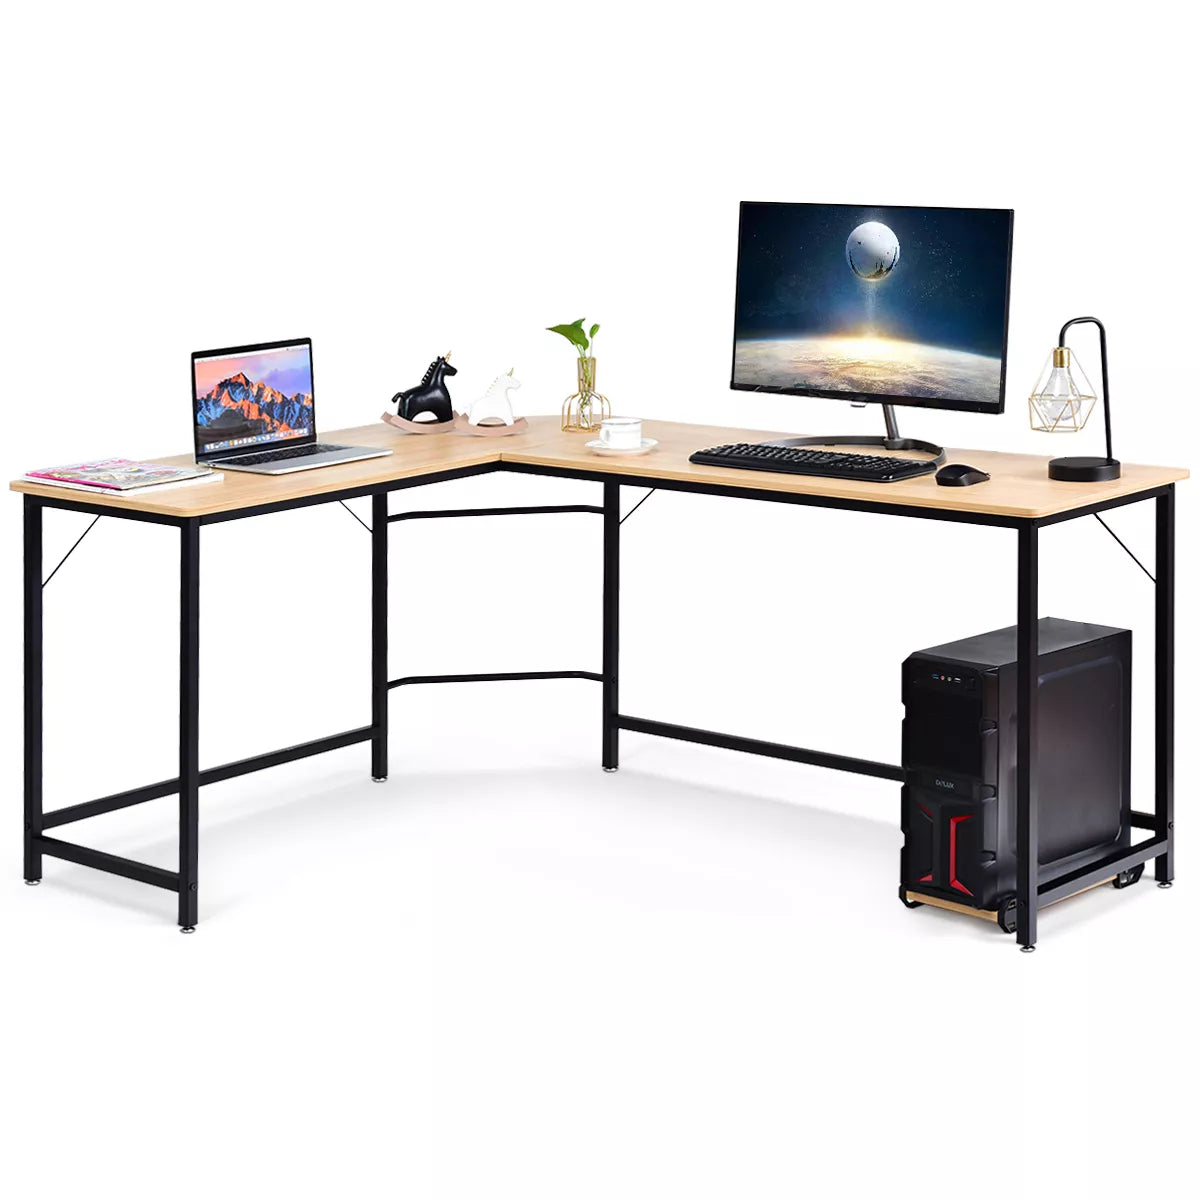 L-Shaped Computer Desk Corner Workstation Study Gaming Table Home Office